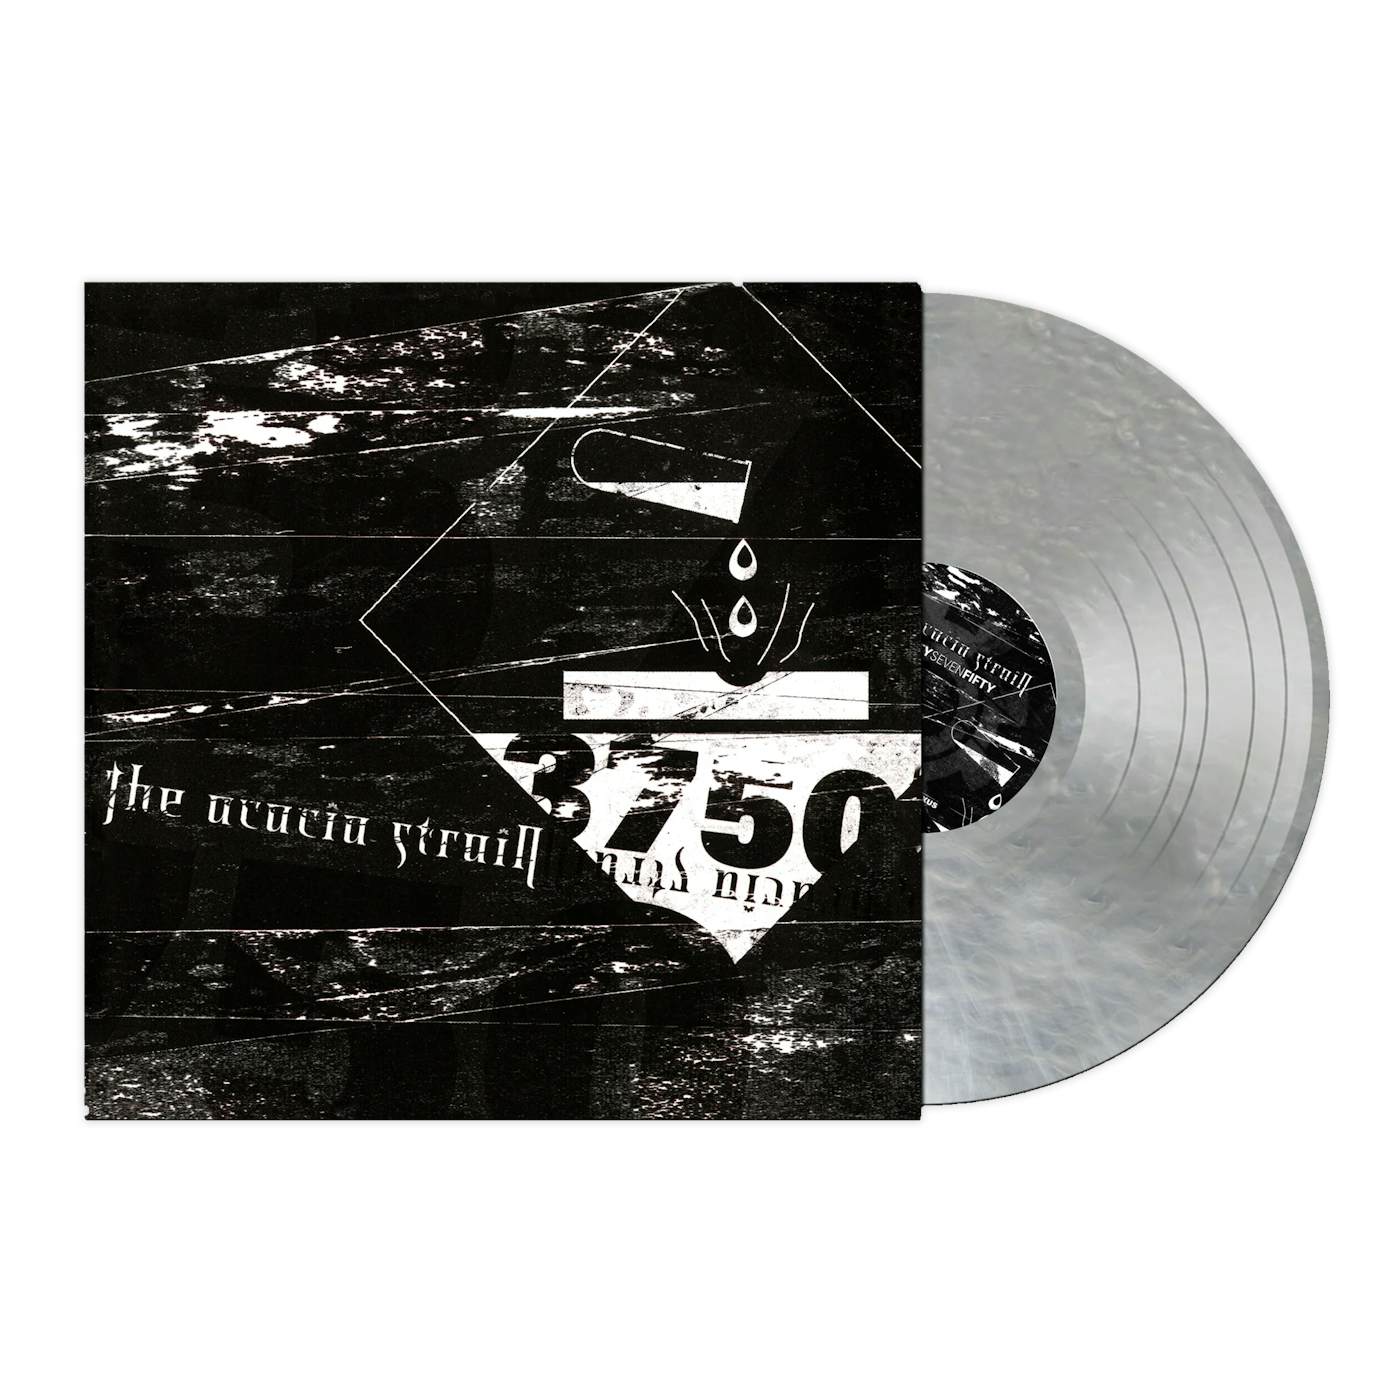 The Acacia Strain - "3750" LP (Vinyl)